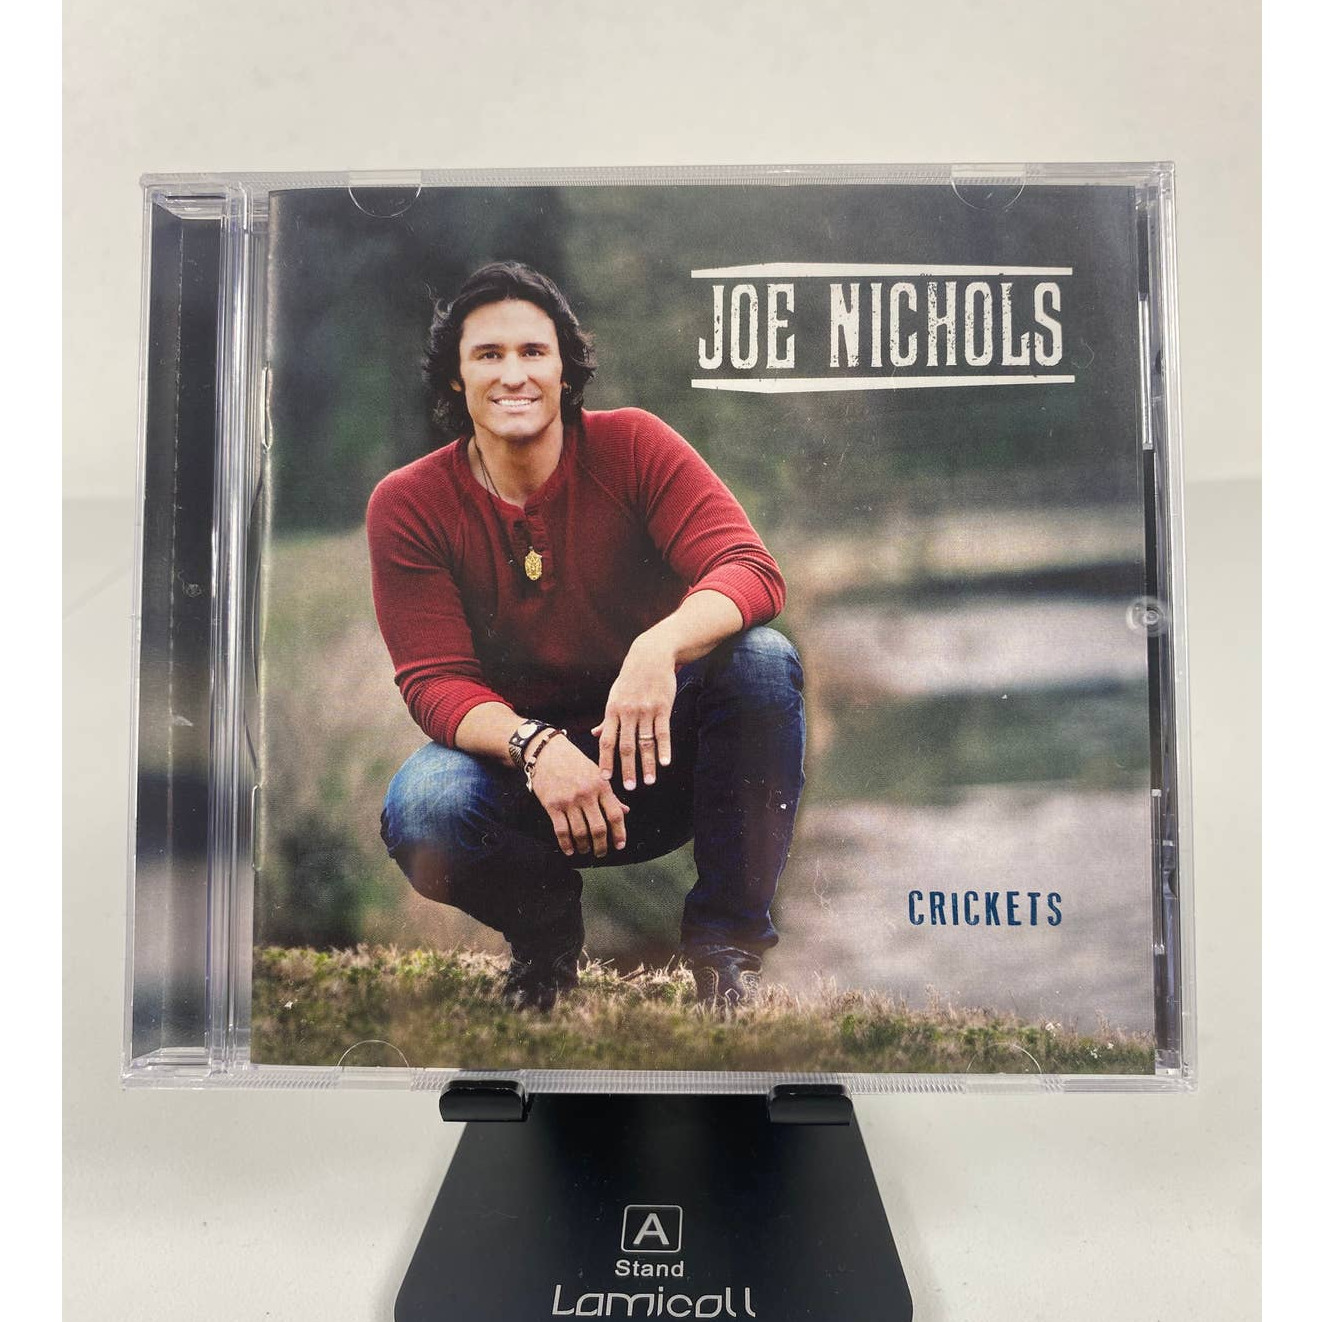 JOE NICHOLS - CRICKETS NEW Record Company Promo CD